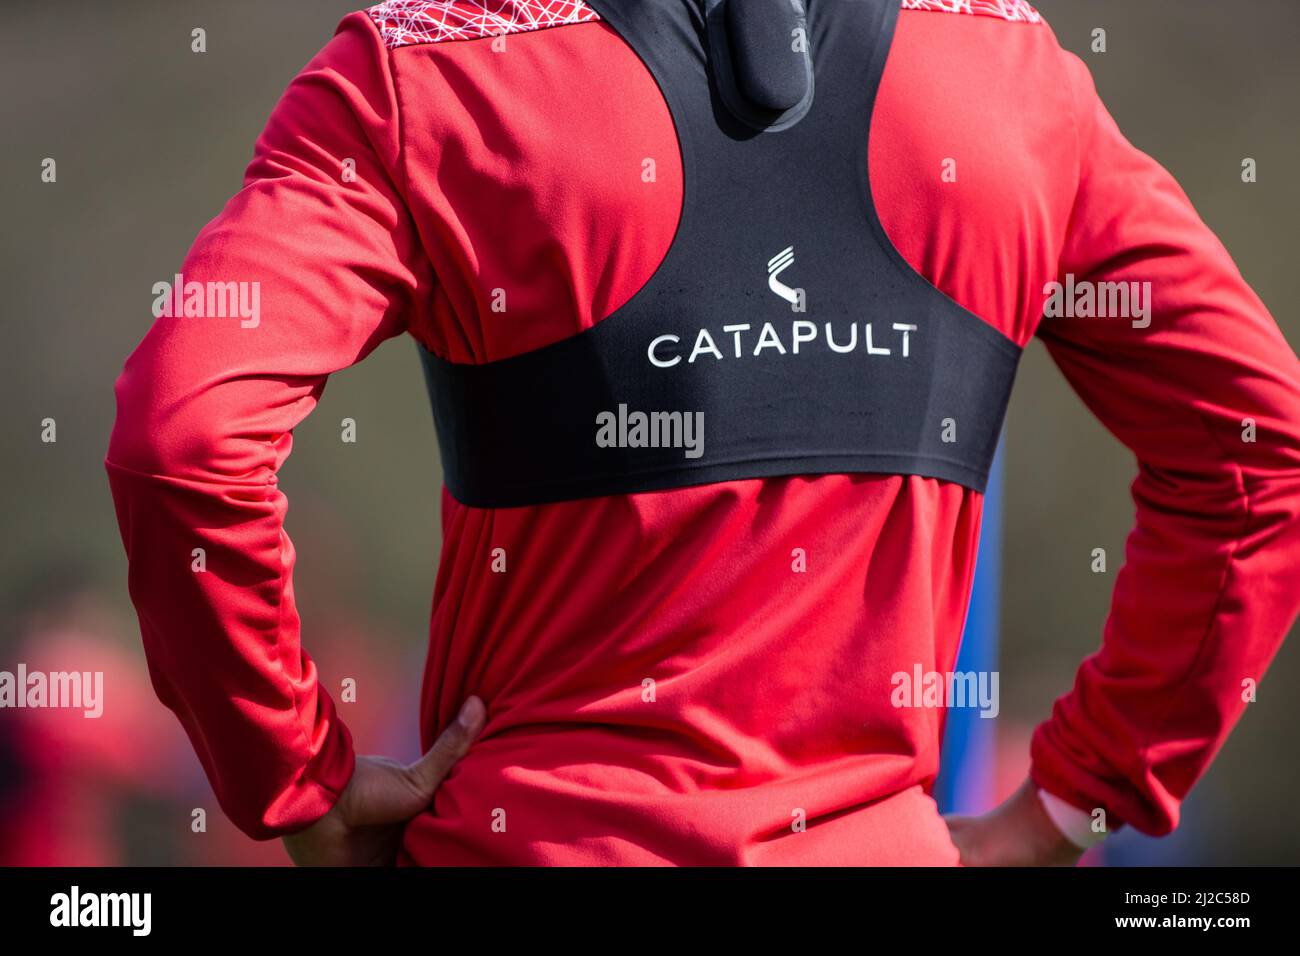 Professional footballer wearing Catapult smart vest Stock Photo